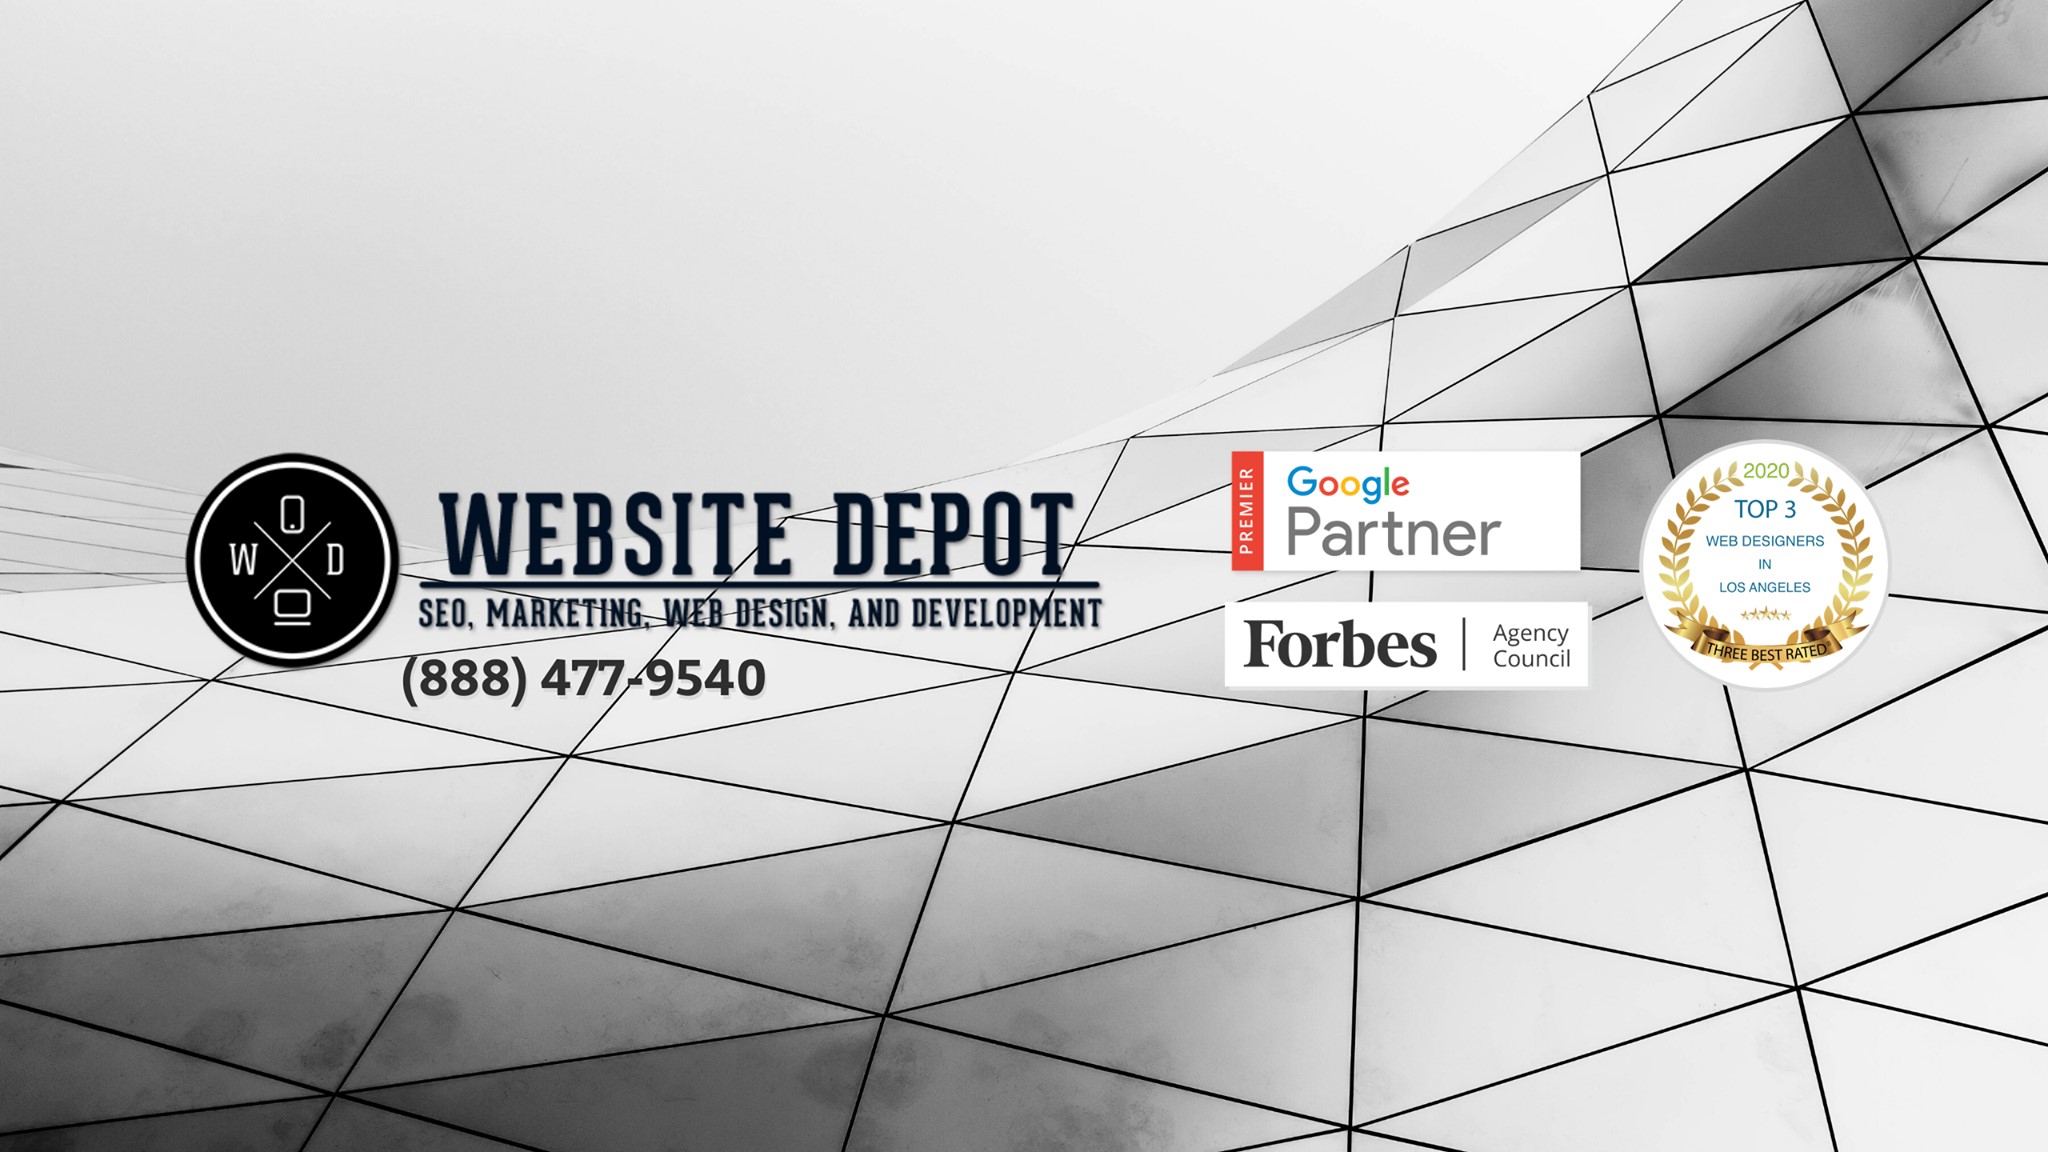 Website Depot Inc. Digital Marketing Company